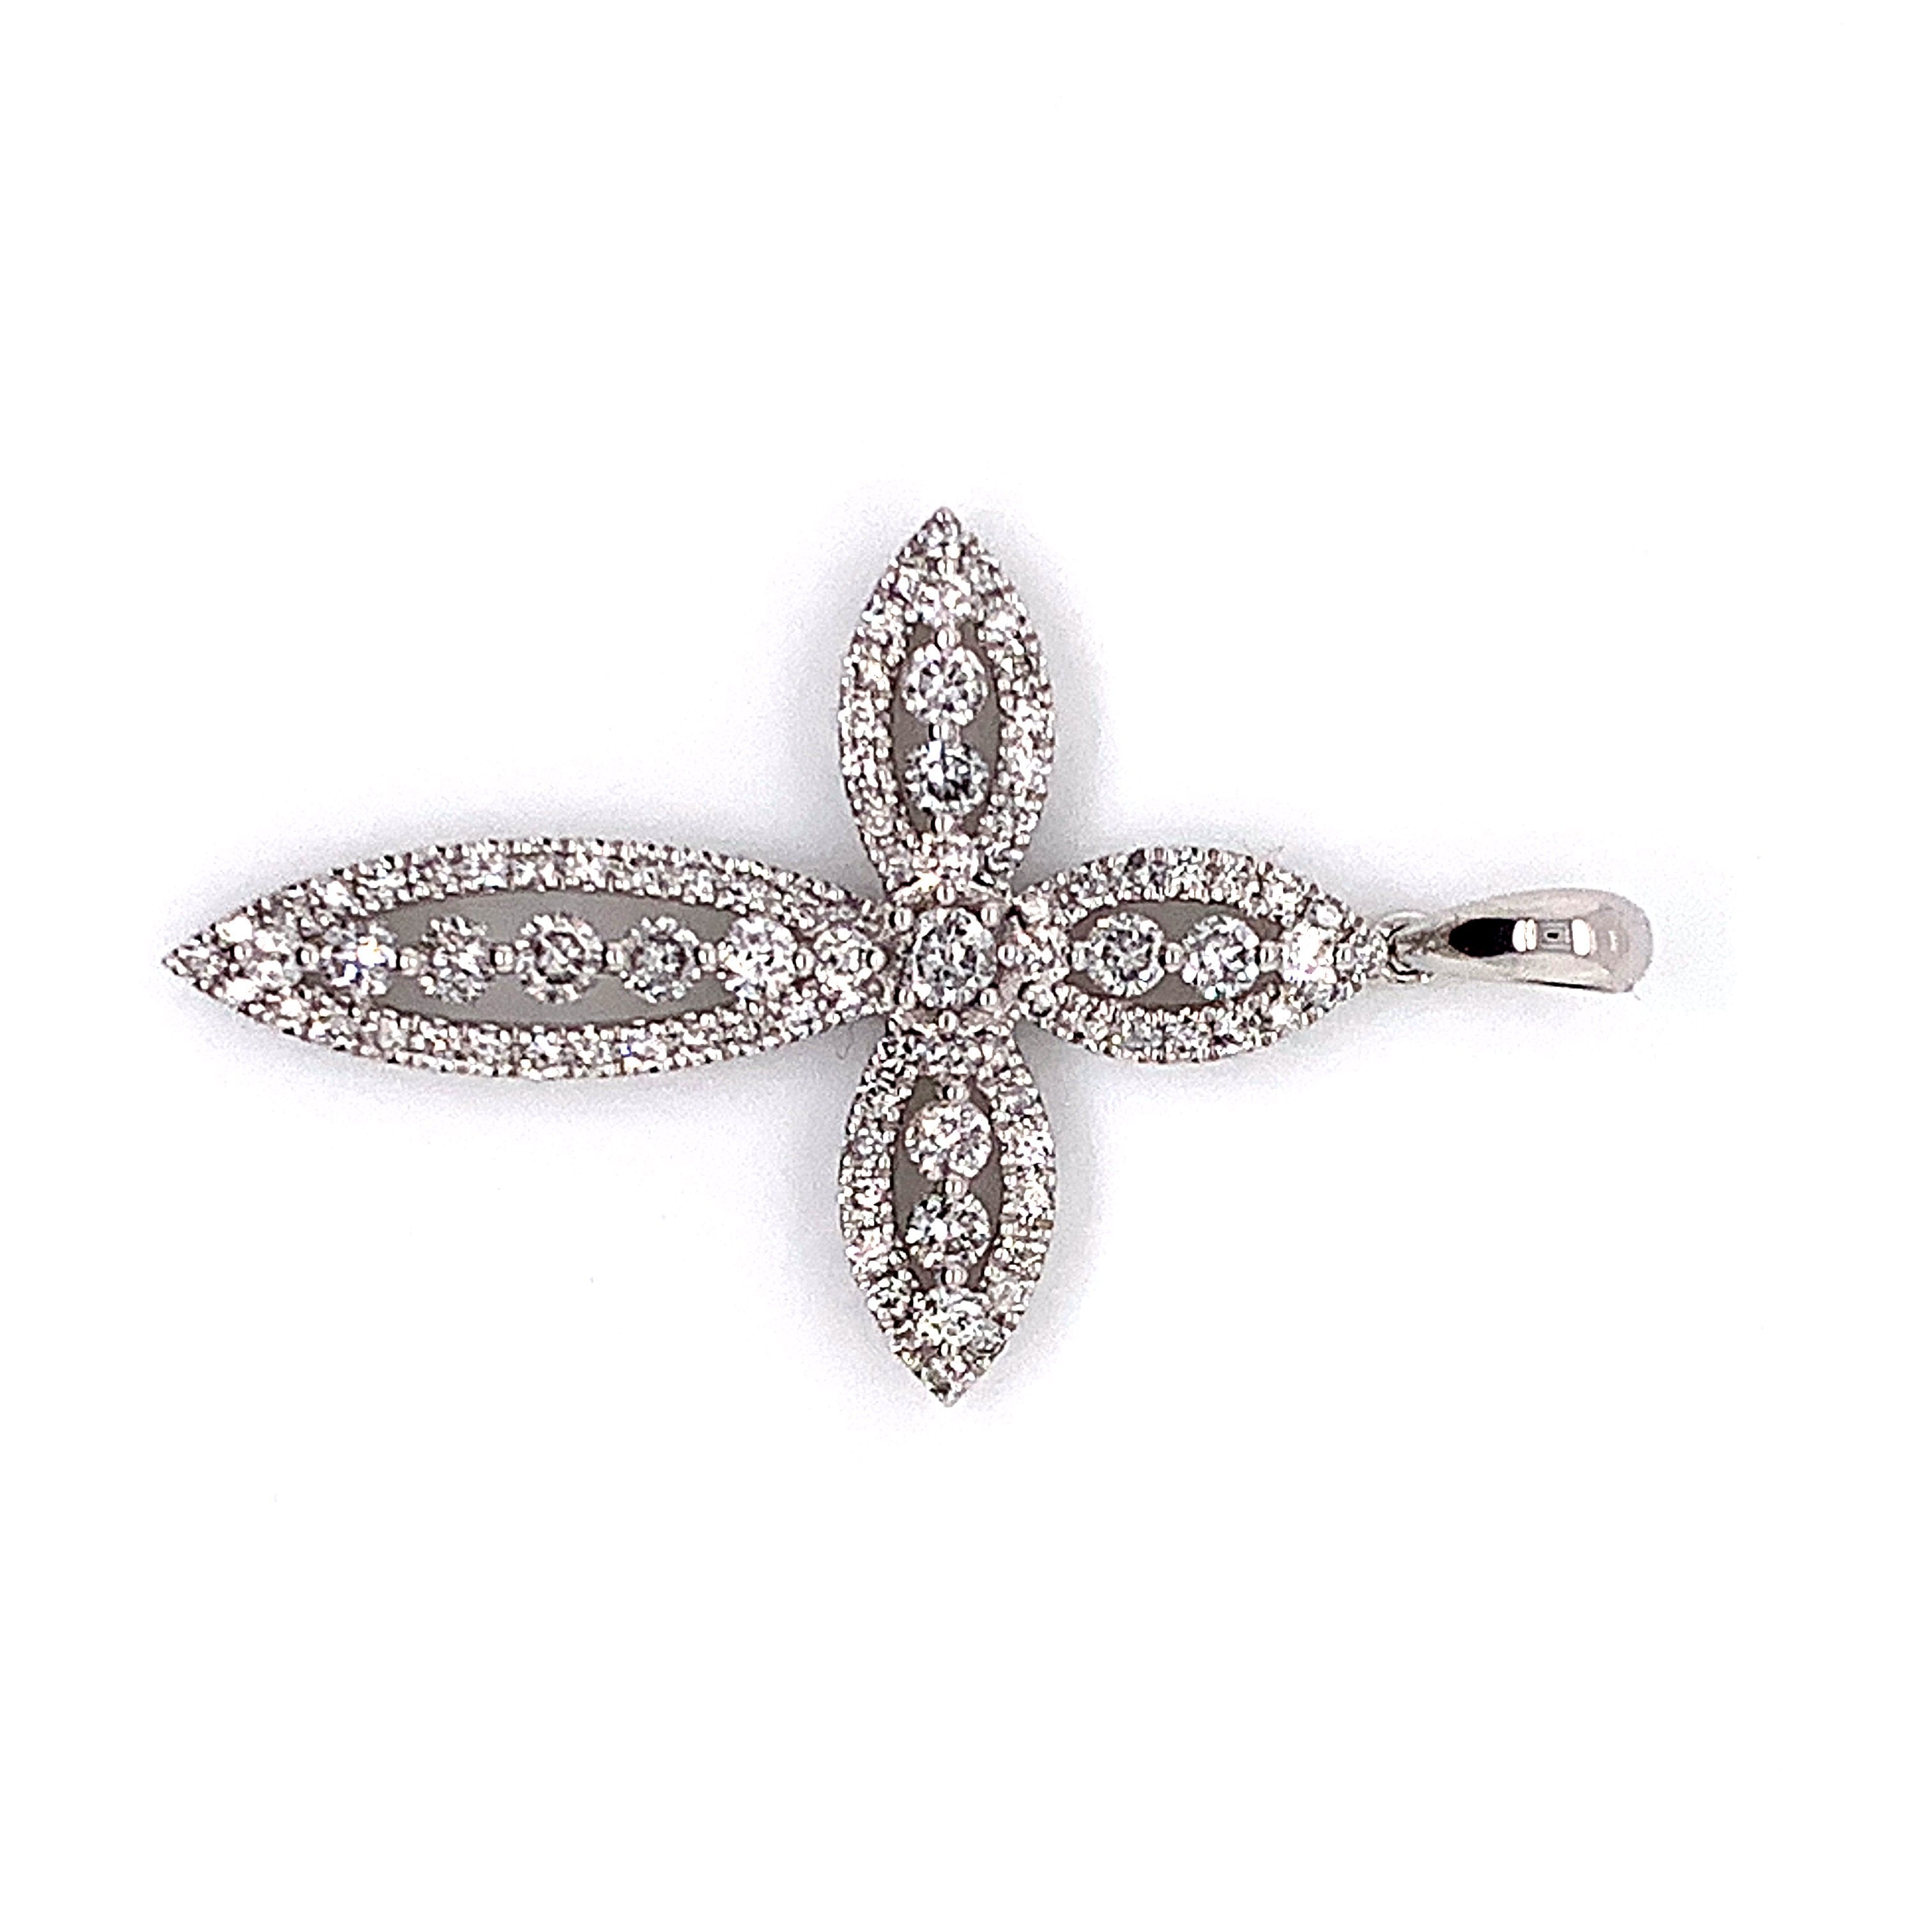 14K White Gold Diamond Cross Pendant - White Carat - USA & Canada